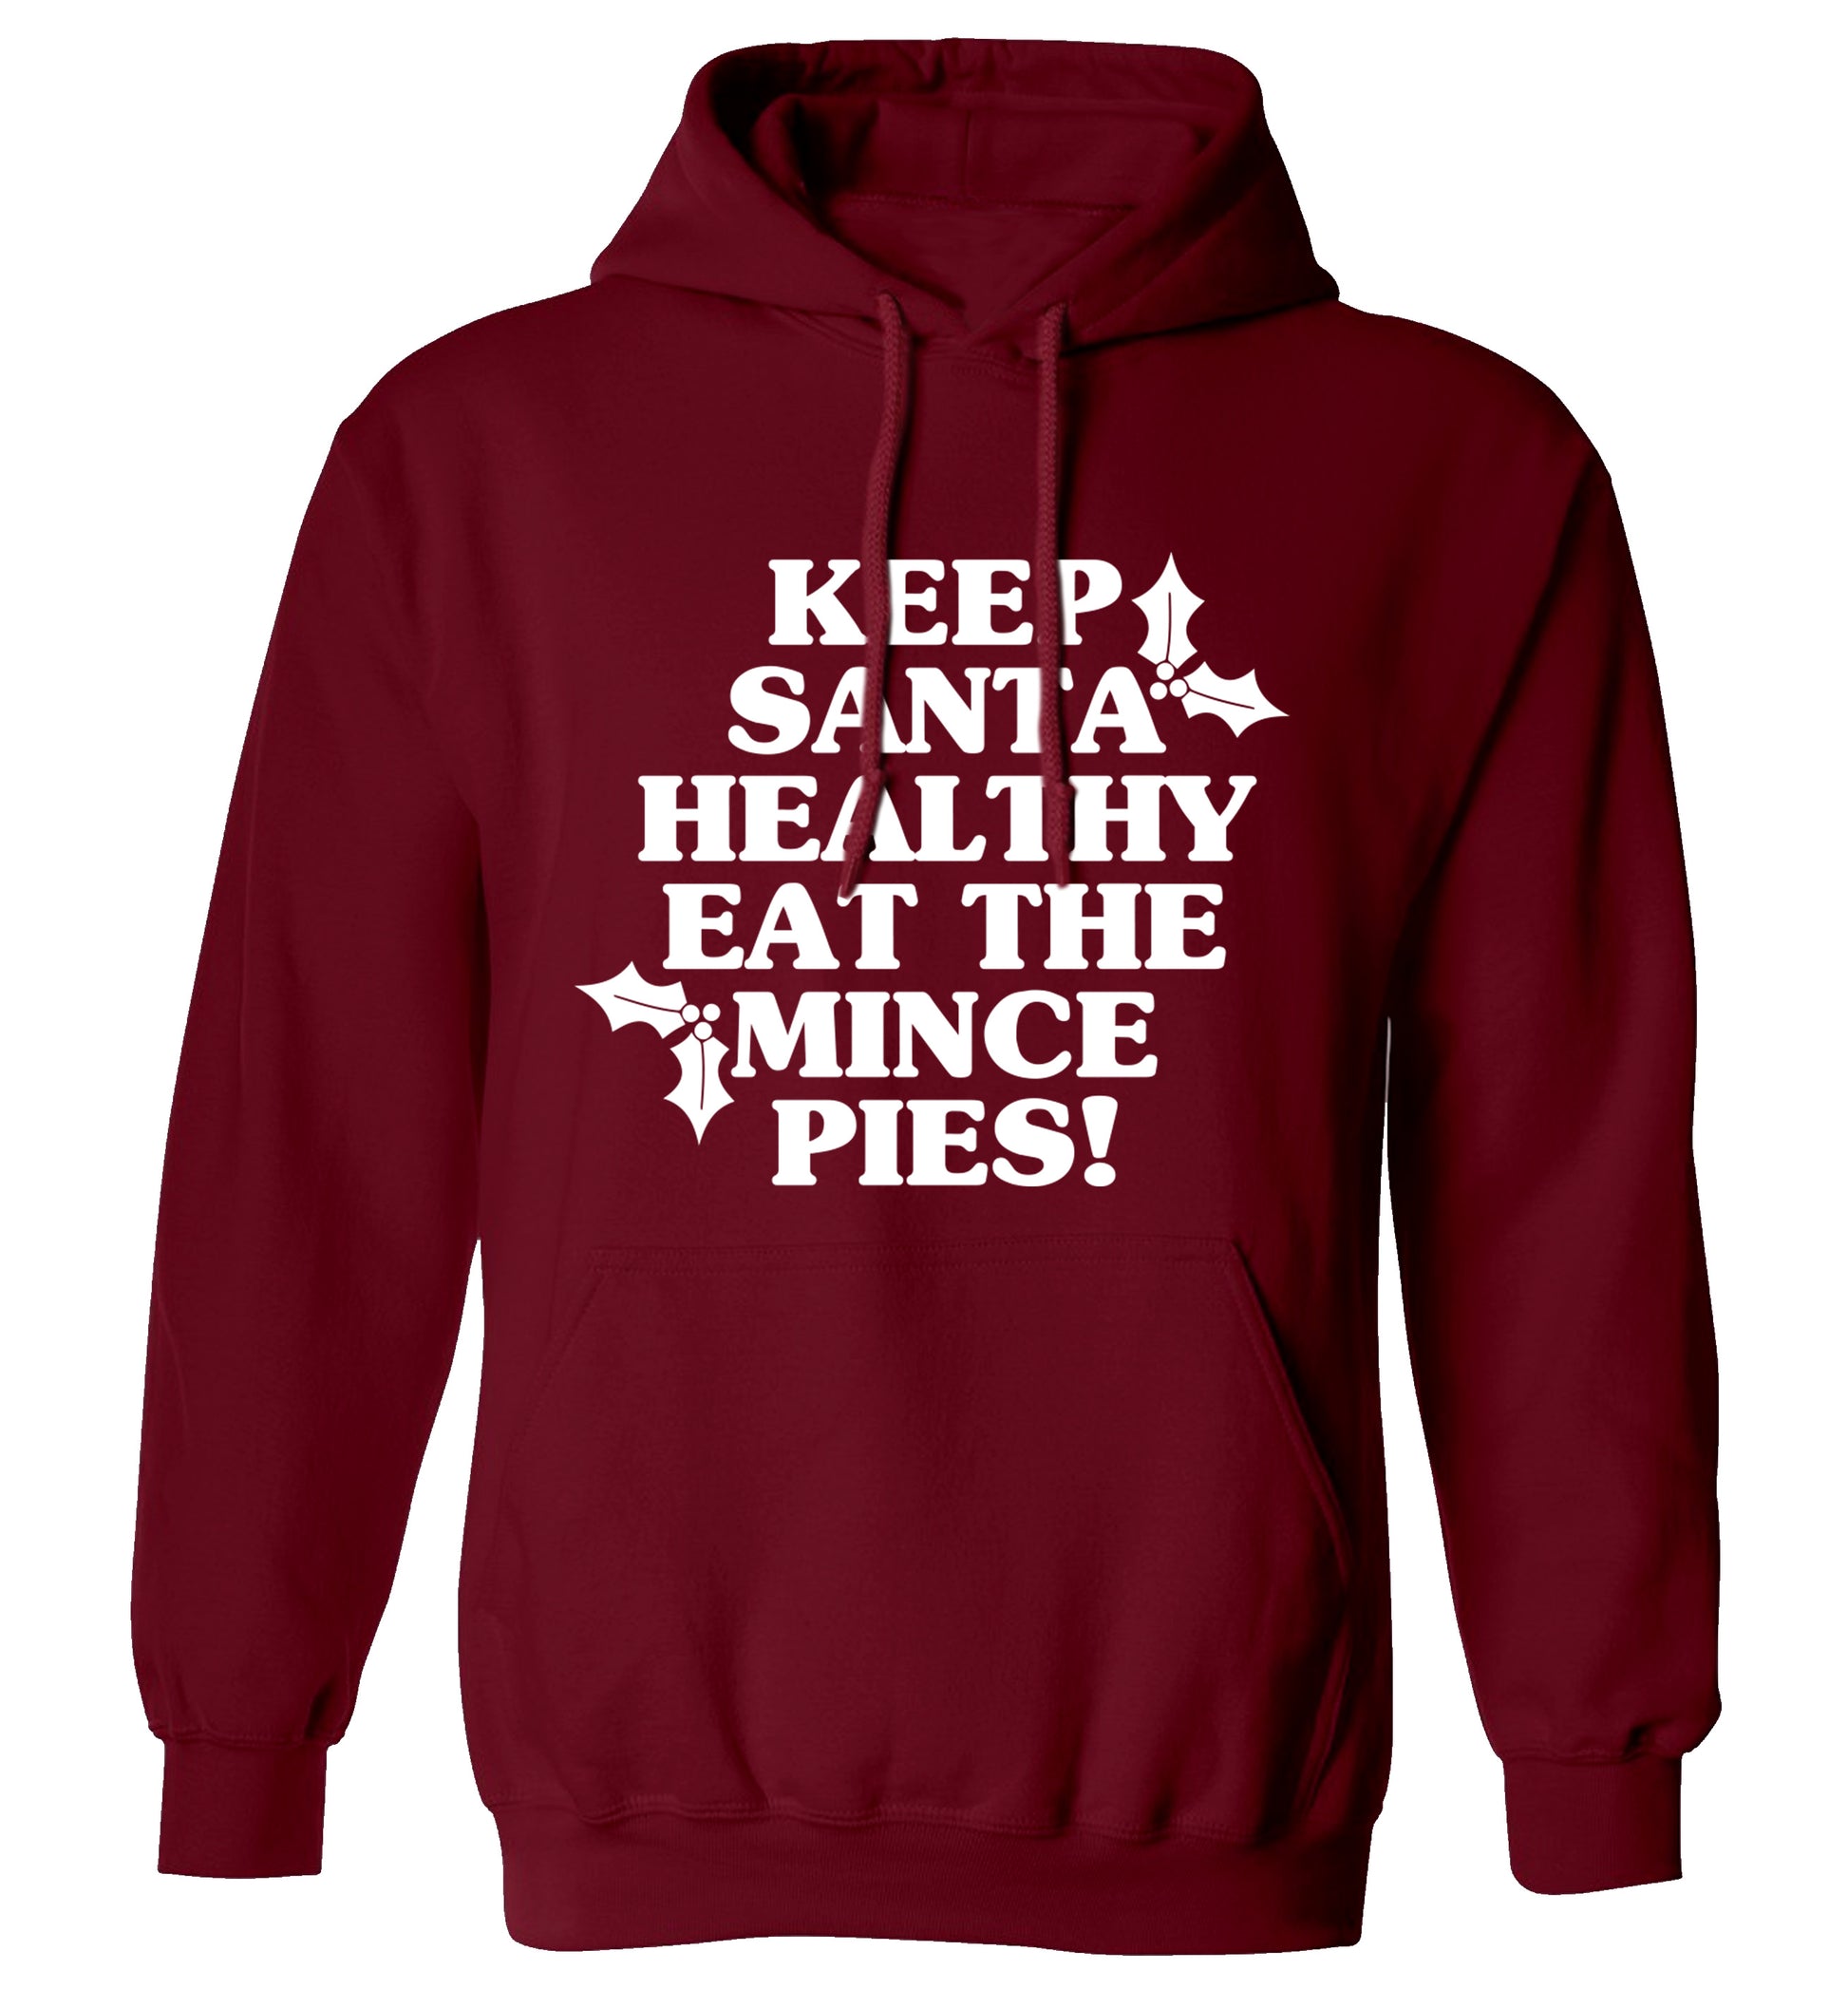 Keep santa healthy eat the mince pies adults unisex maroon hoodie 2XL